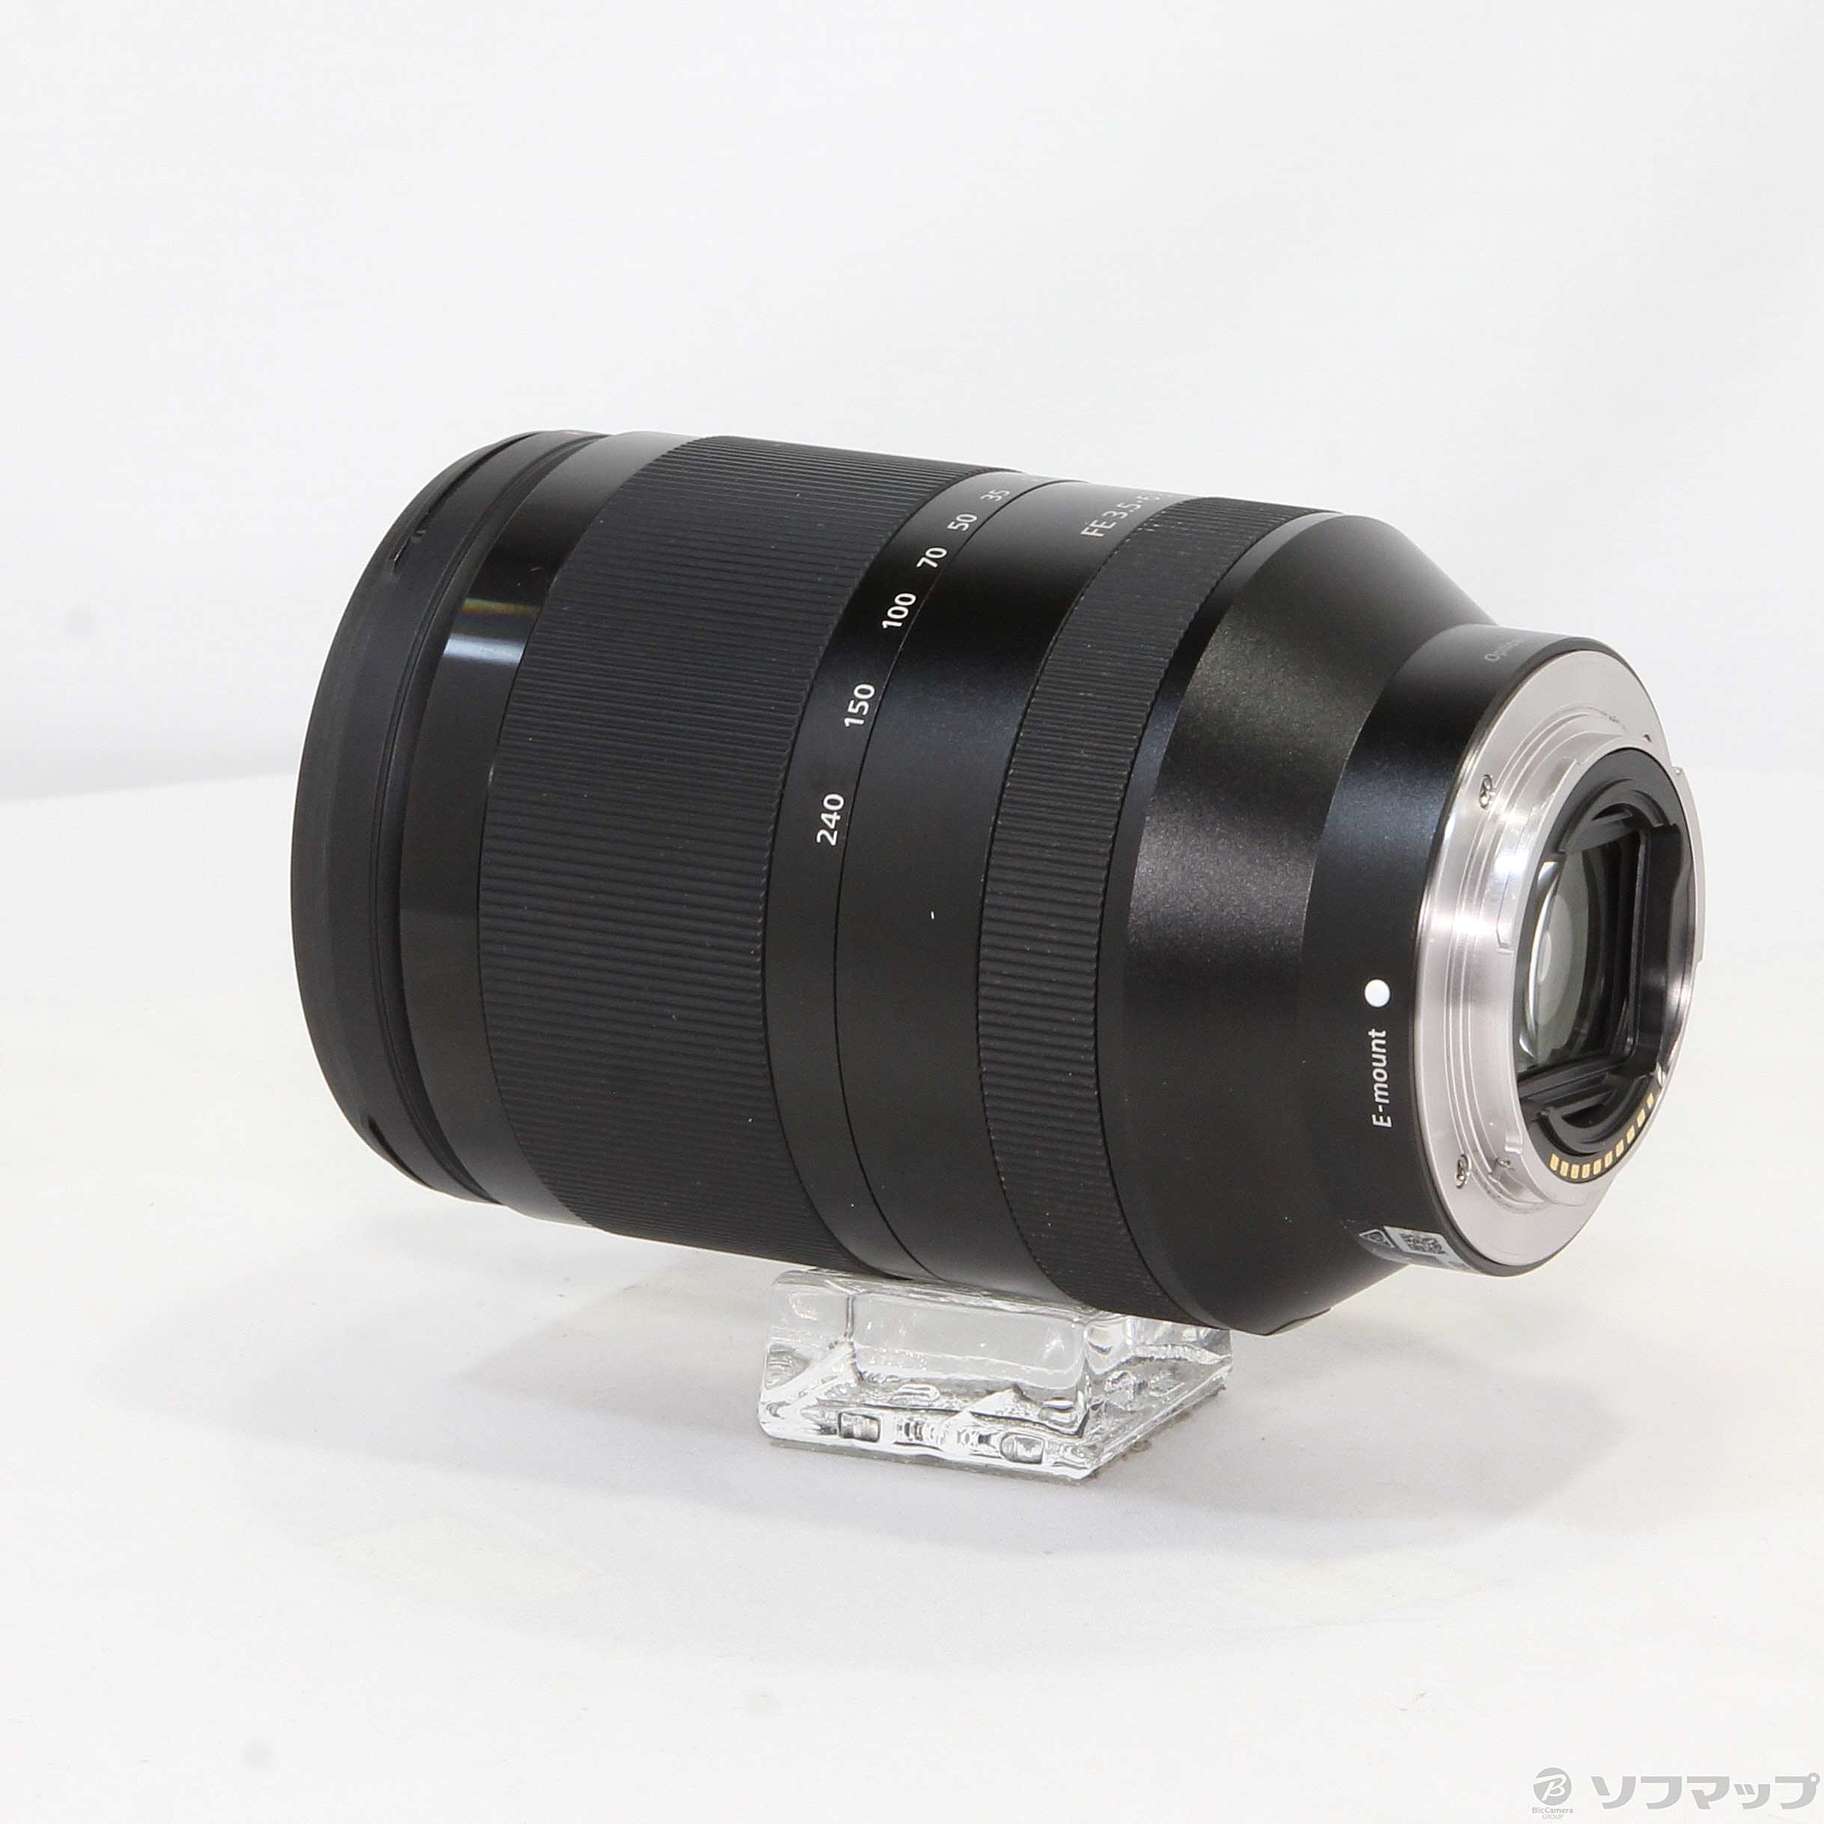 SONY SEL24240 FE 24-240mm F3.5-6.3 OSS - レンズ(ズーム)